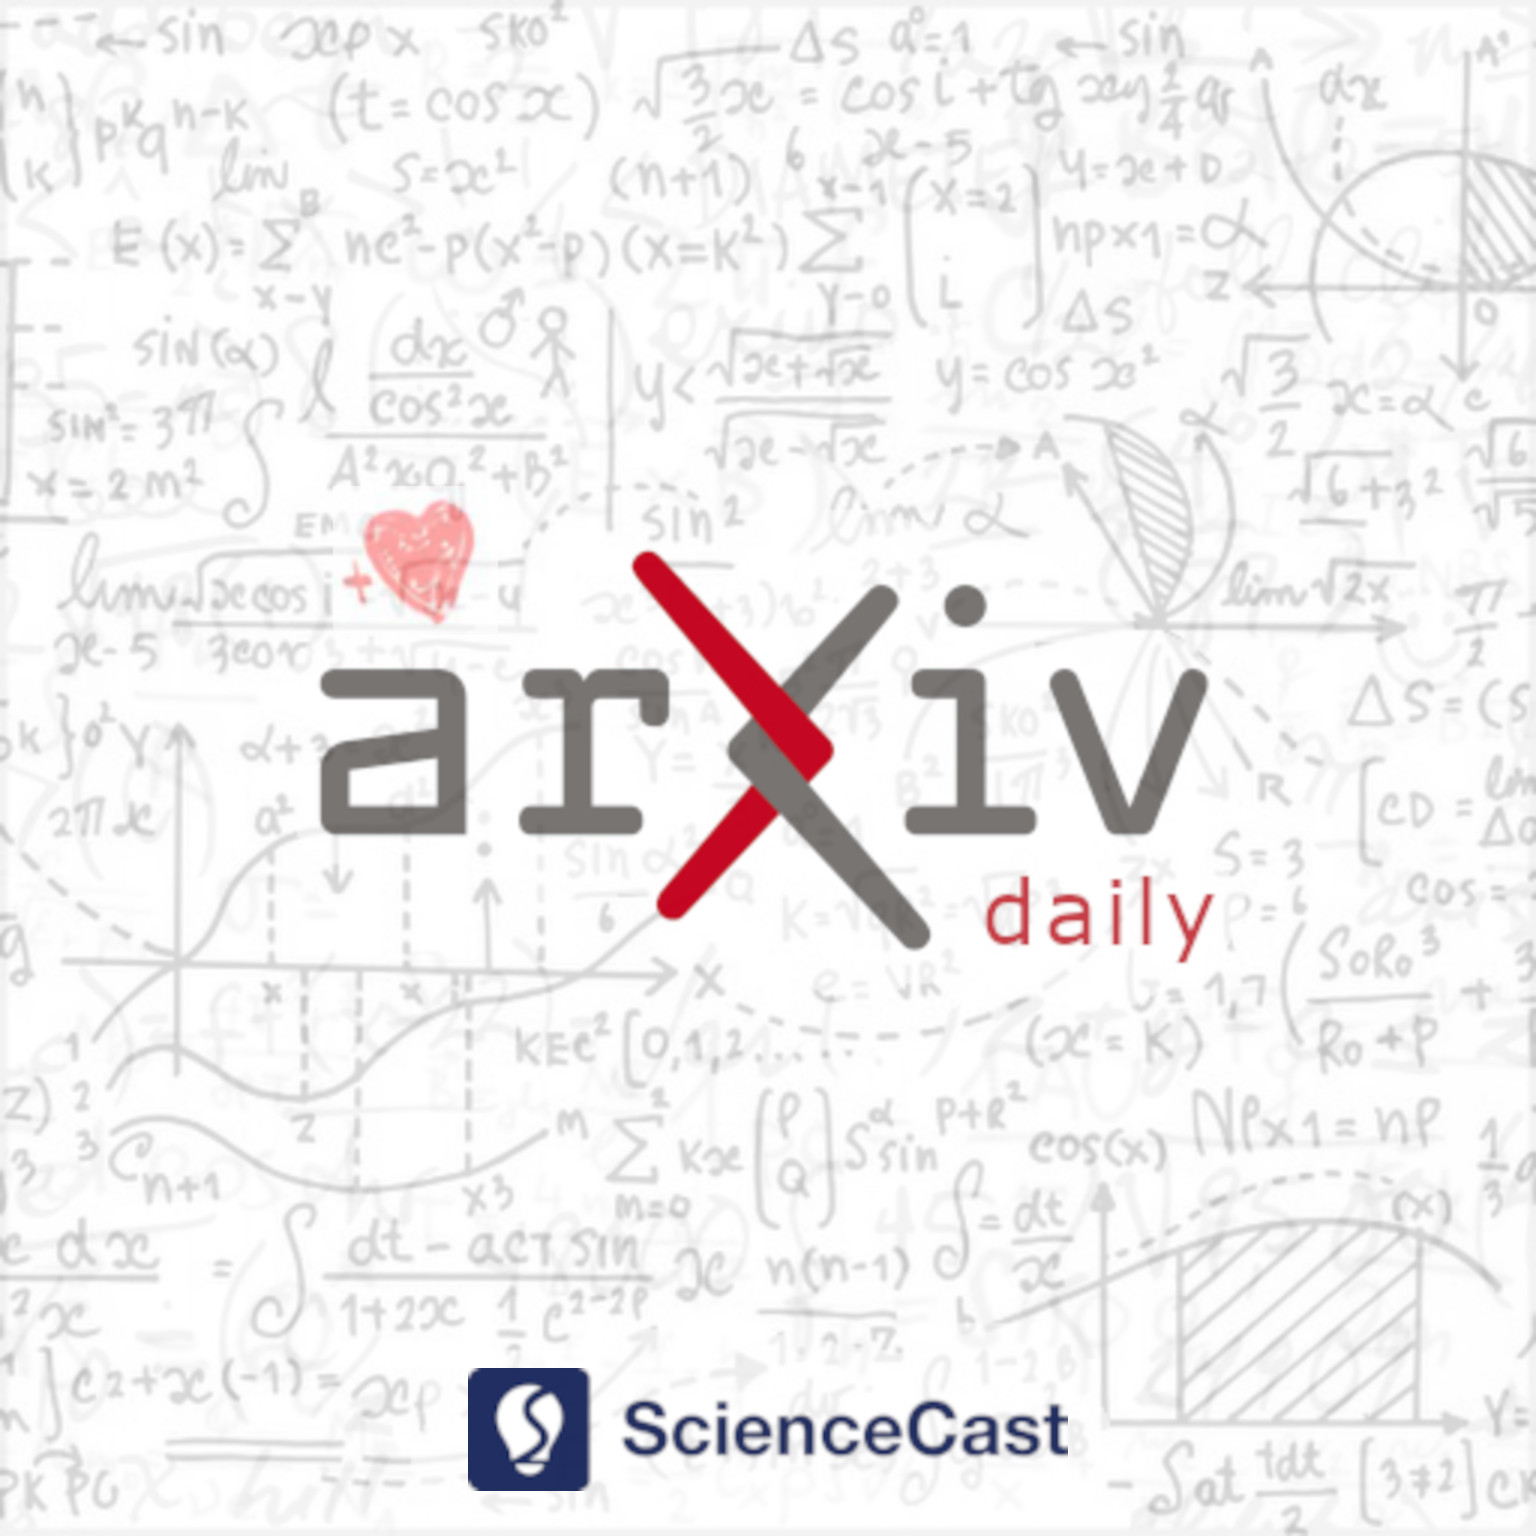 arXiv daily: Databases